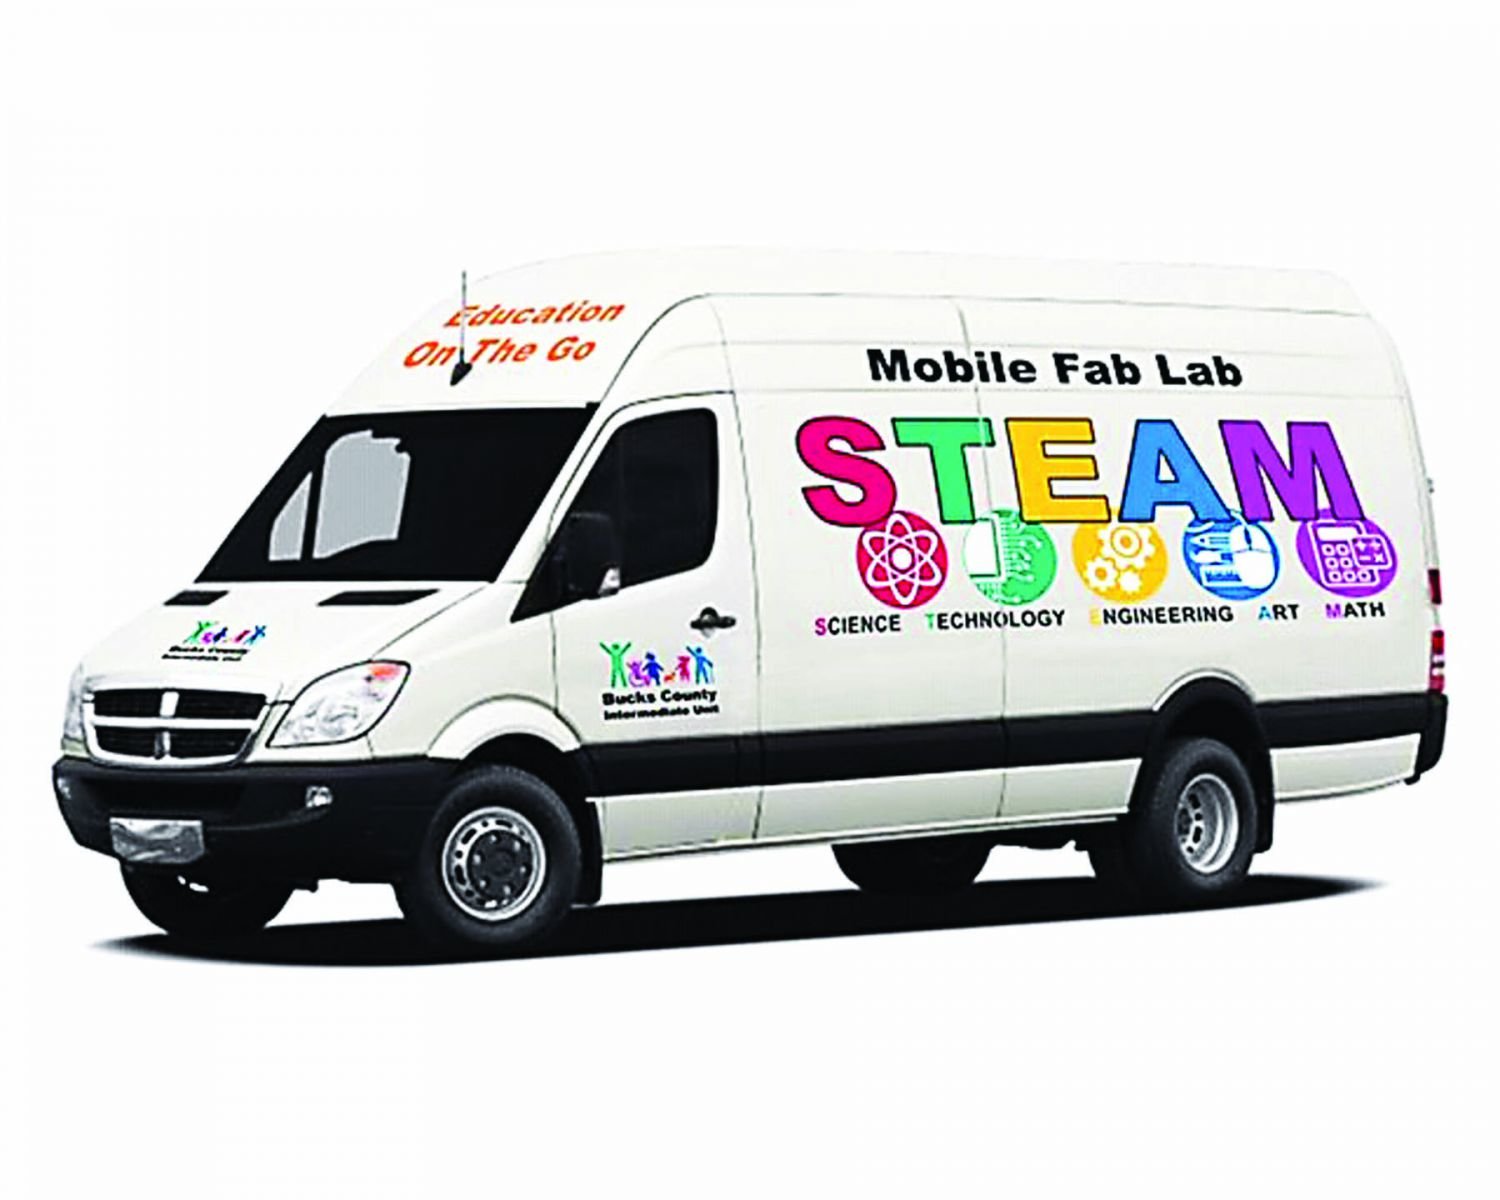 The Mobile Fab Lab van.